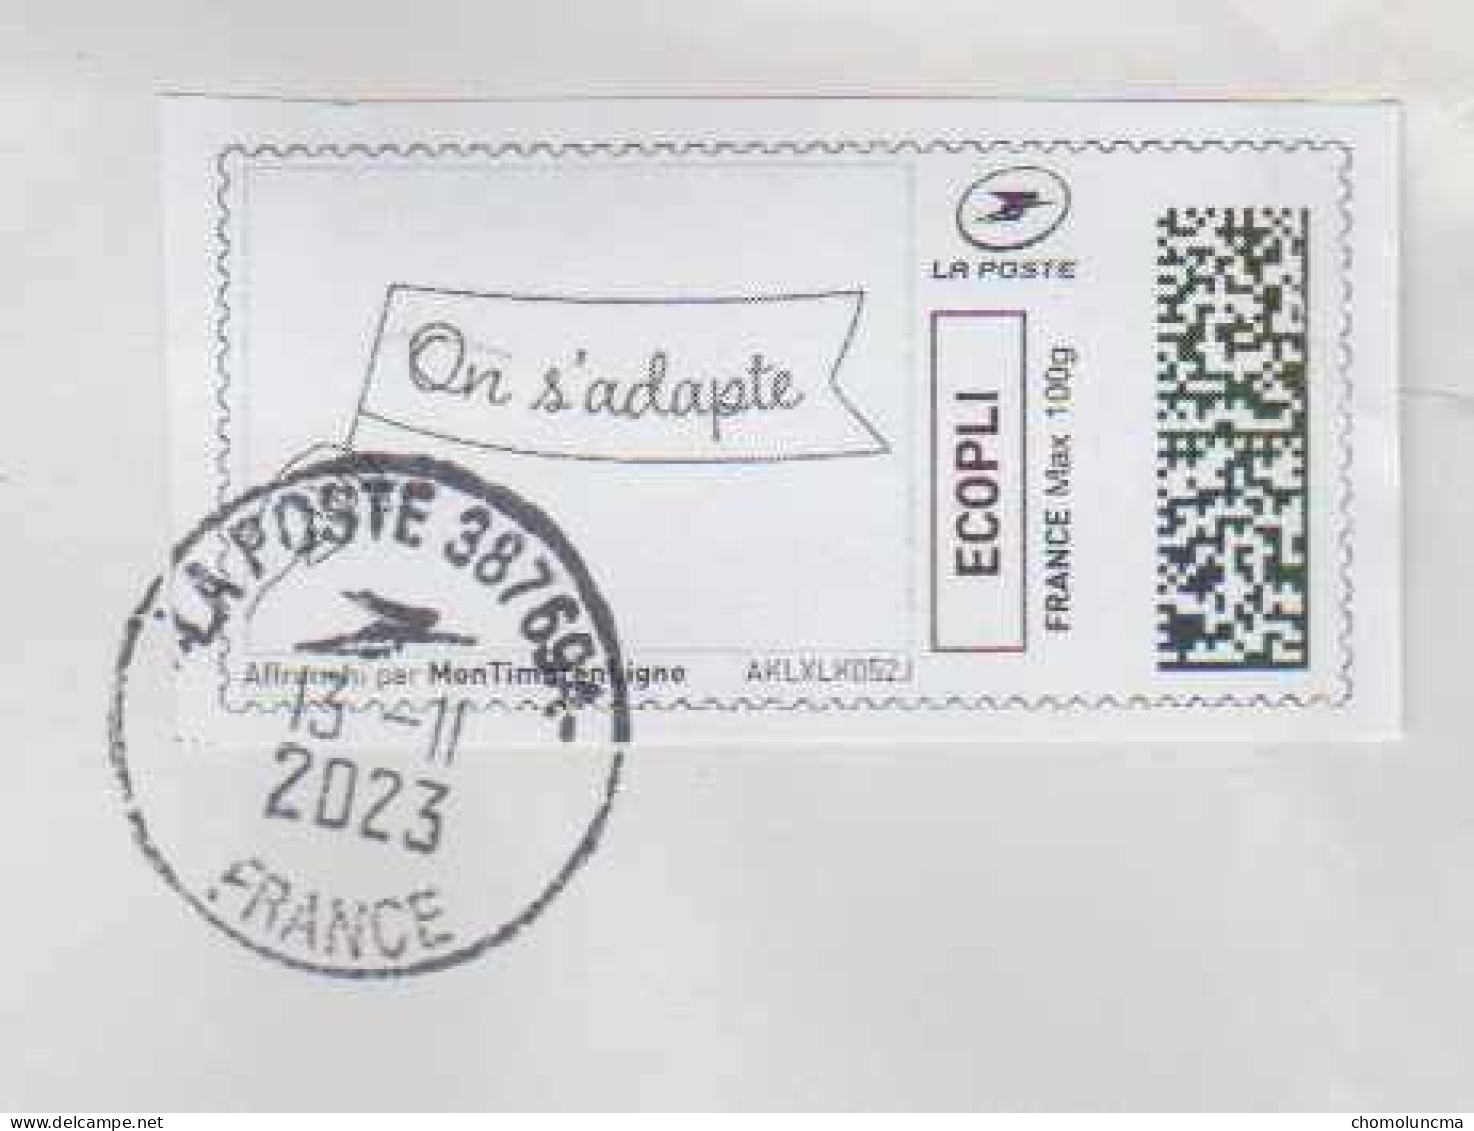 Montimbrenligne On S' Adapte Timbre Imprimé Post Office Printed Stamp Pli Courrier Cover Lettre Ecopli 100g Letter - Druckbare Briefmarken (Montimbrenligne)